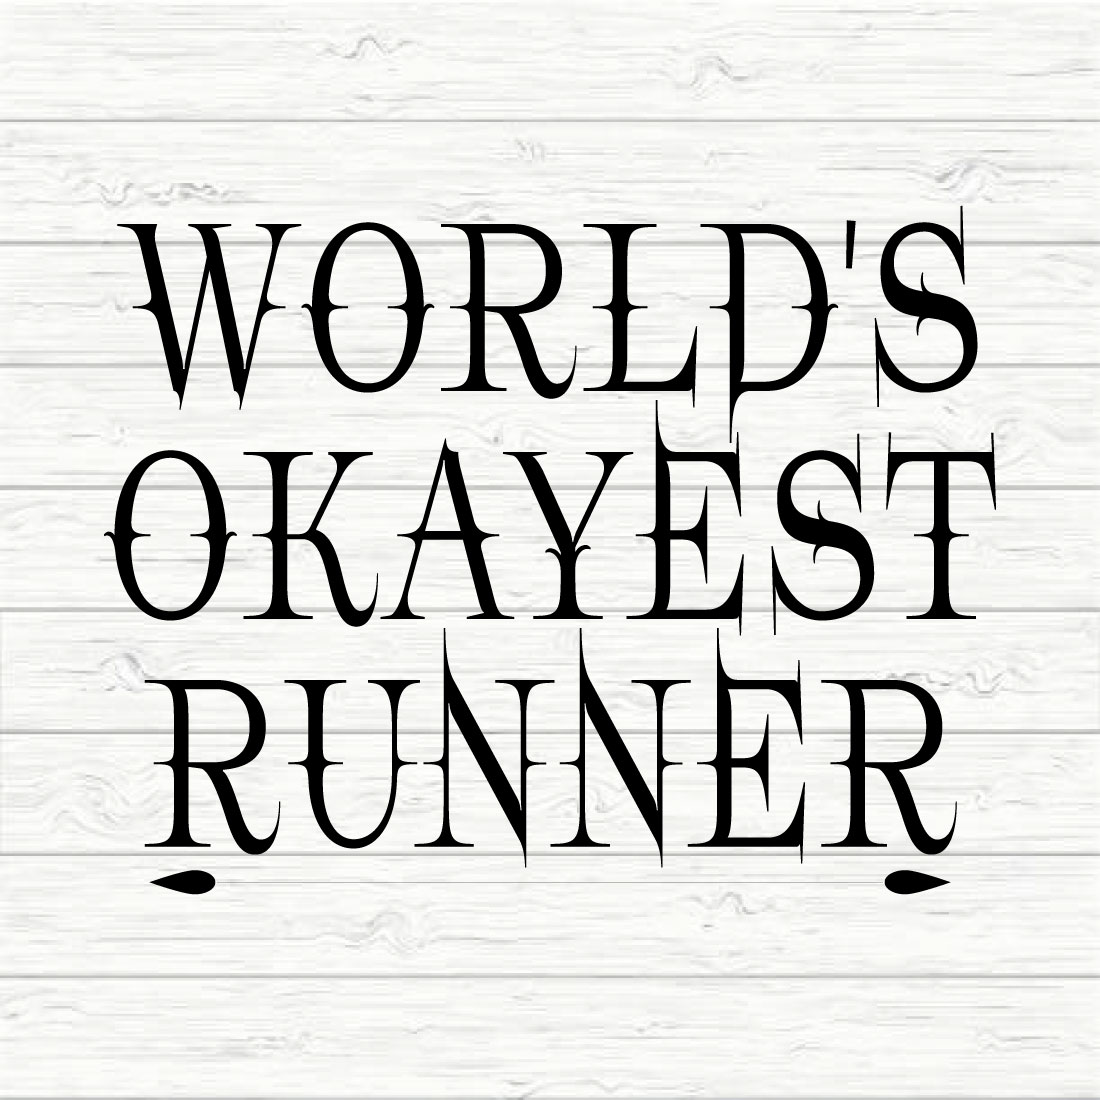 World's Okayest Runner preview image.